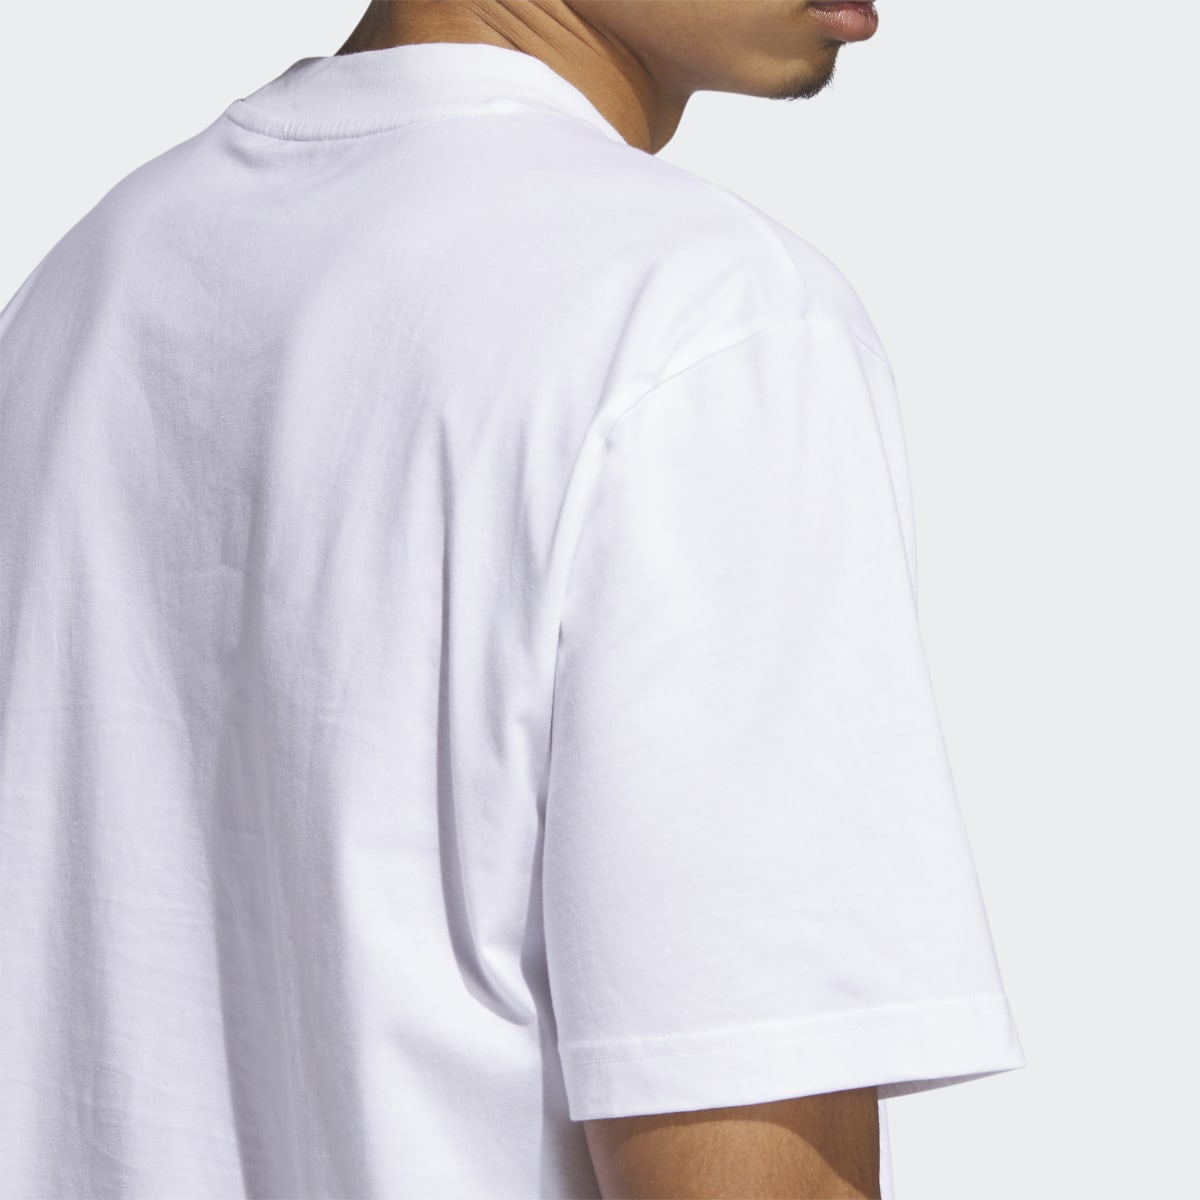 Adidas Trae HC Graphic T-Shirt. 7